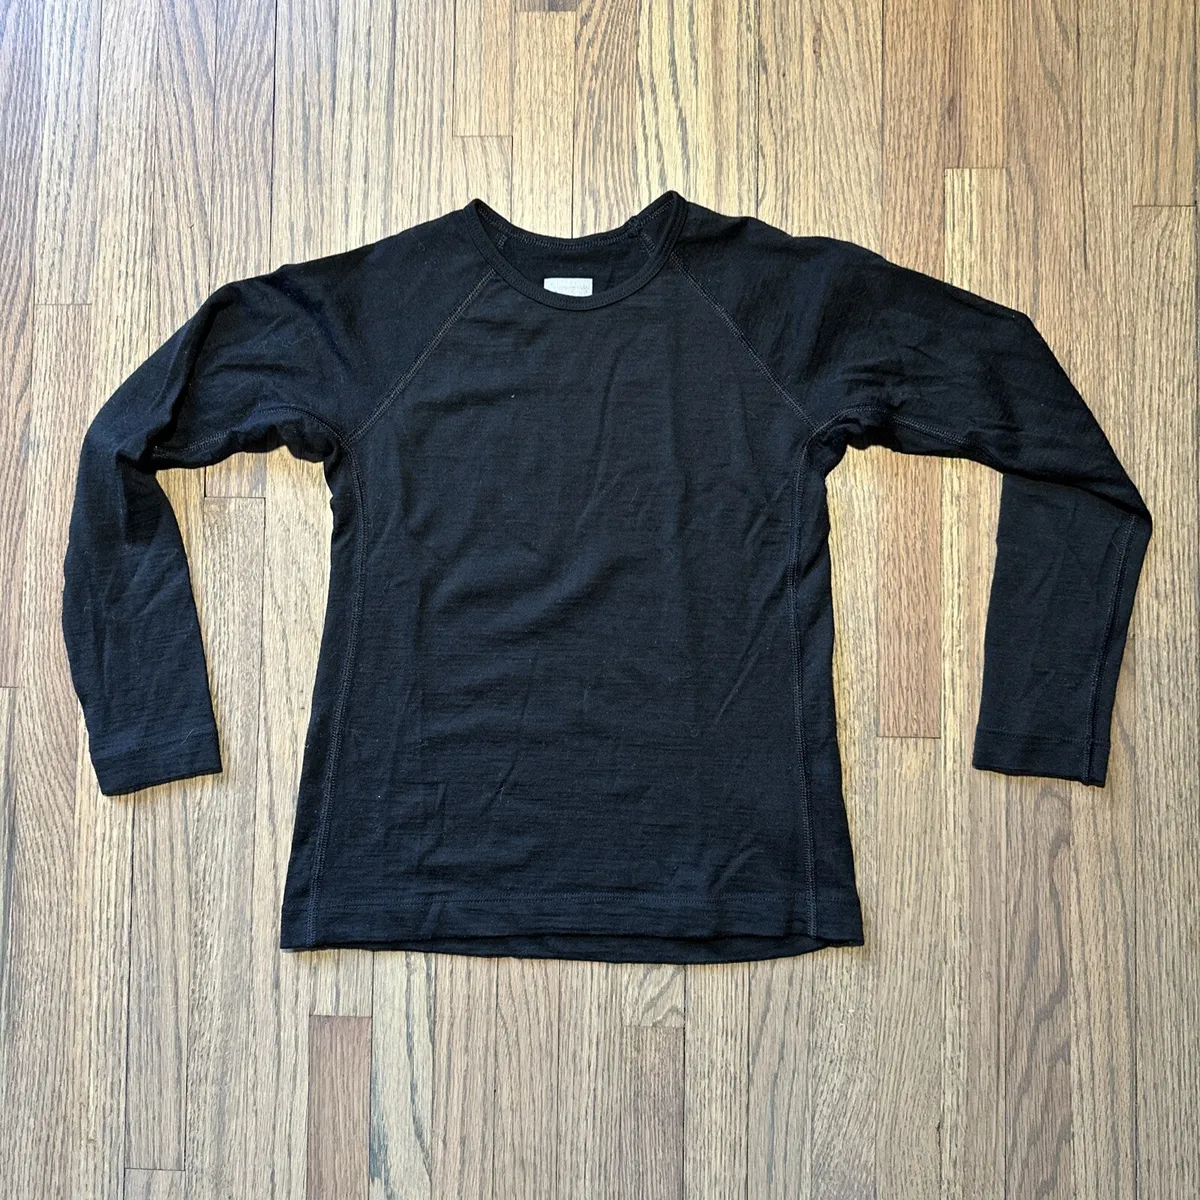 Icebreaker Merino Wool Lightweight Base Layer Shirt Top Black